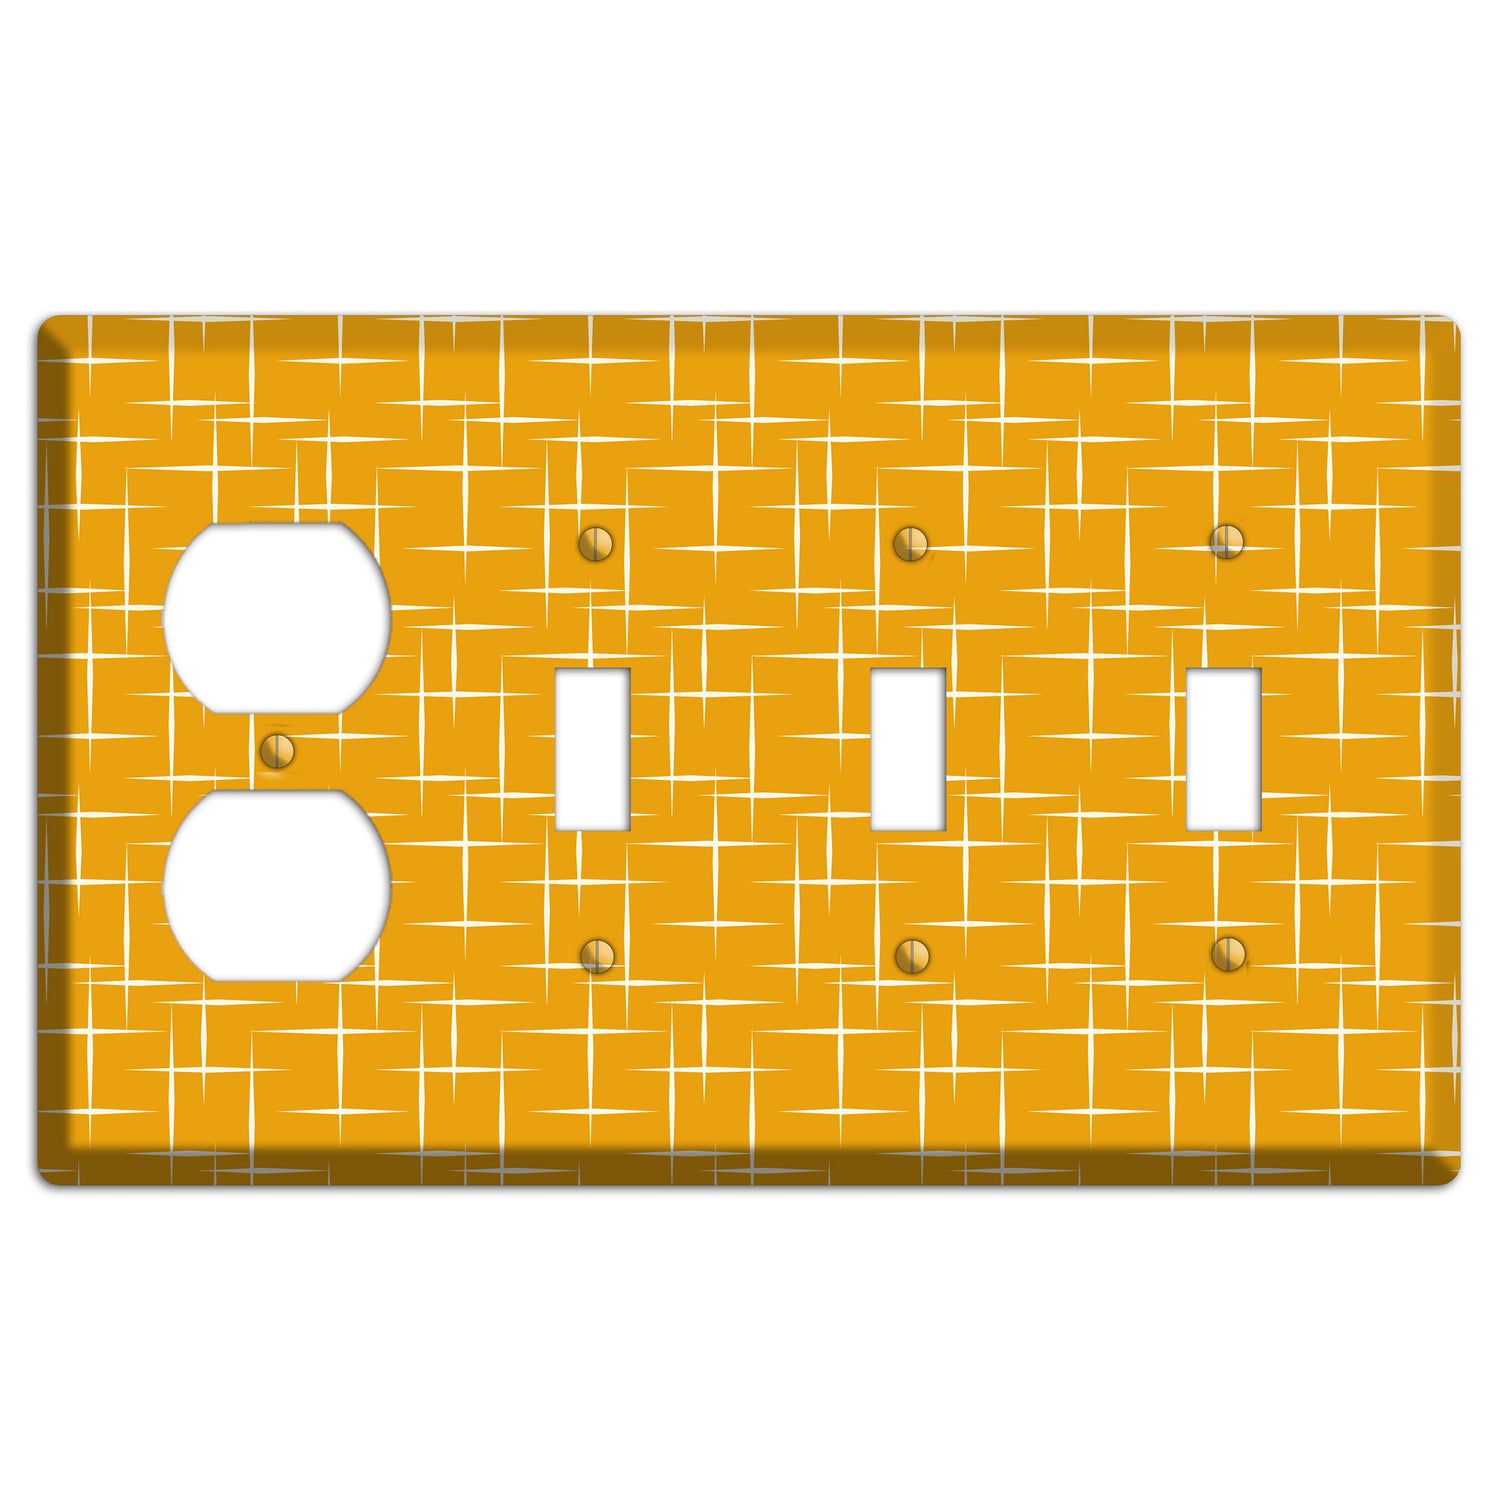 Orange Atomic Duplex / 3 Toggle Wallplate